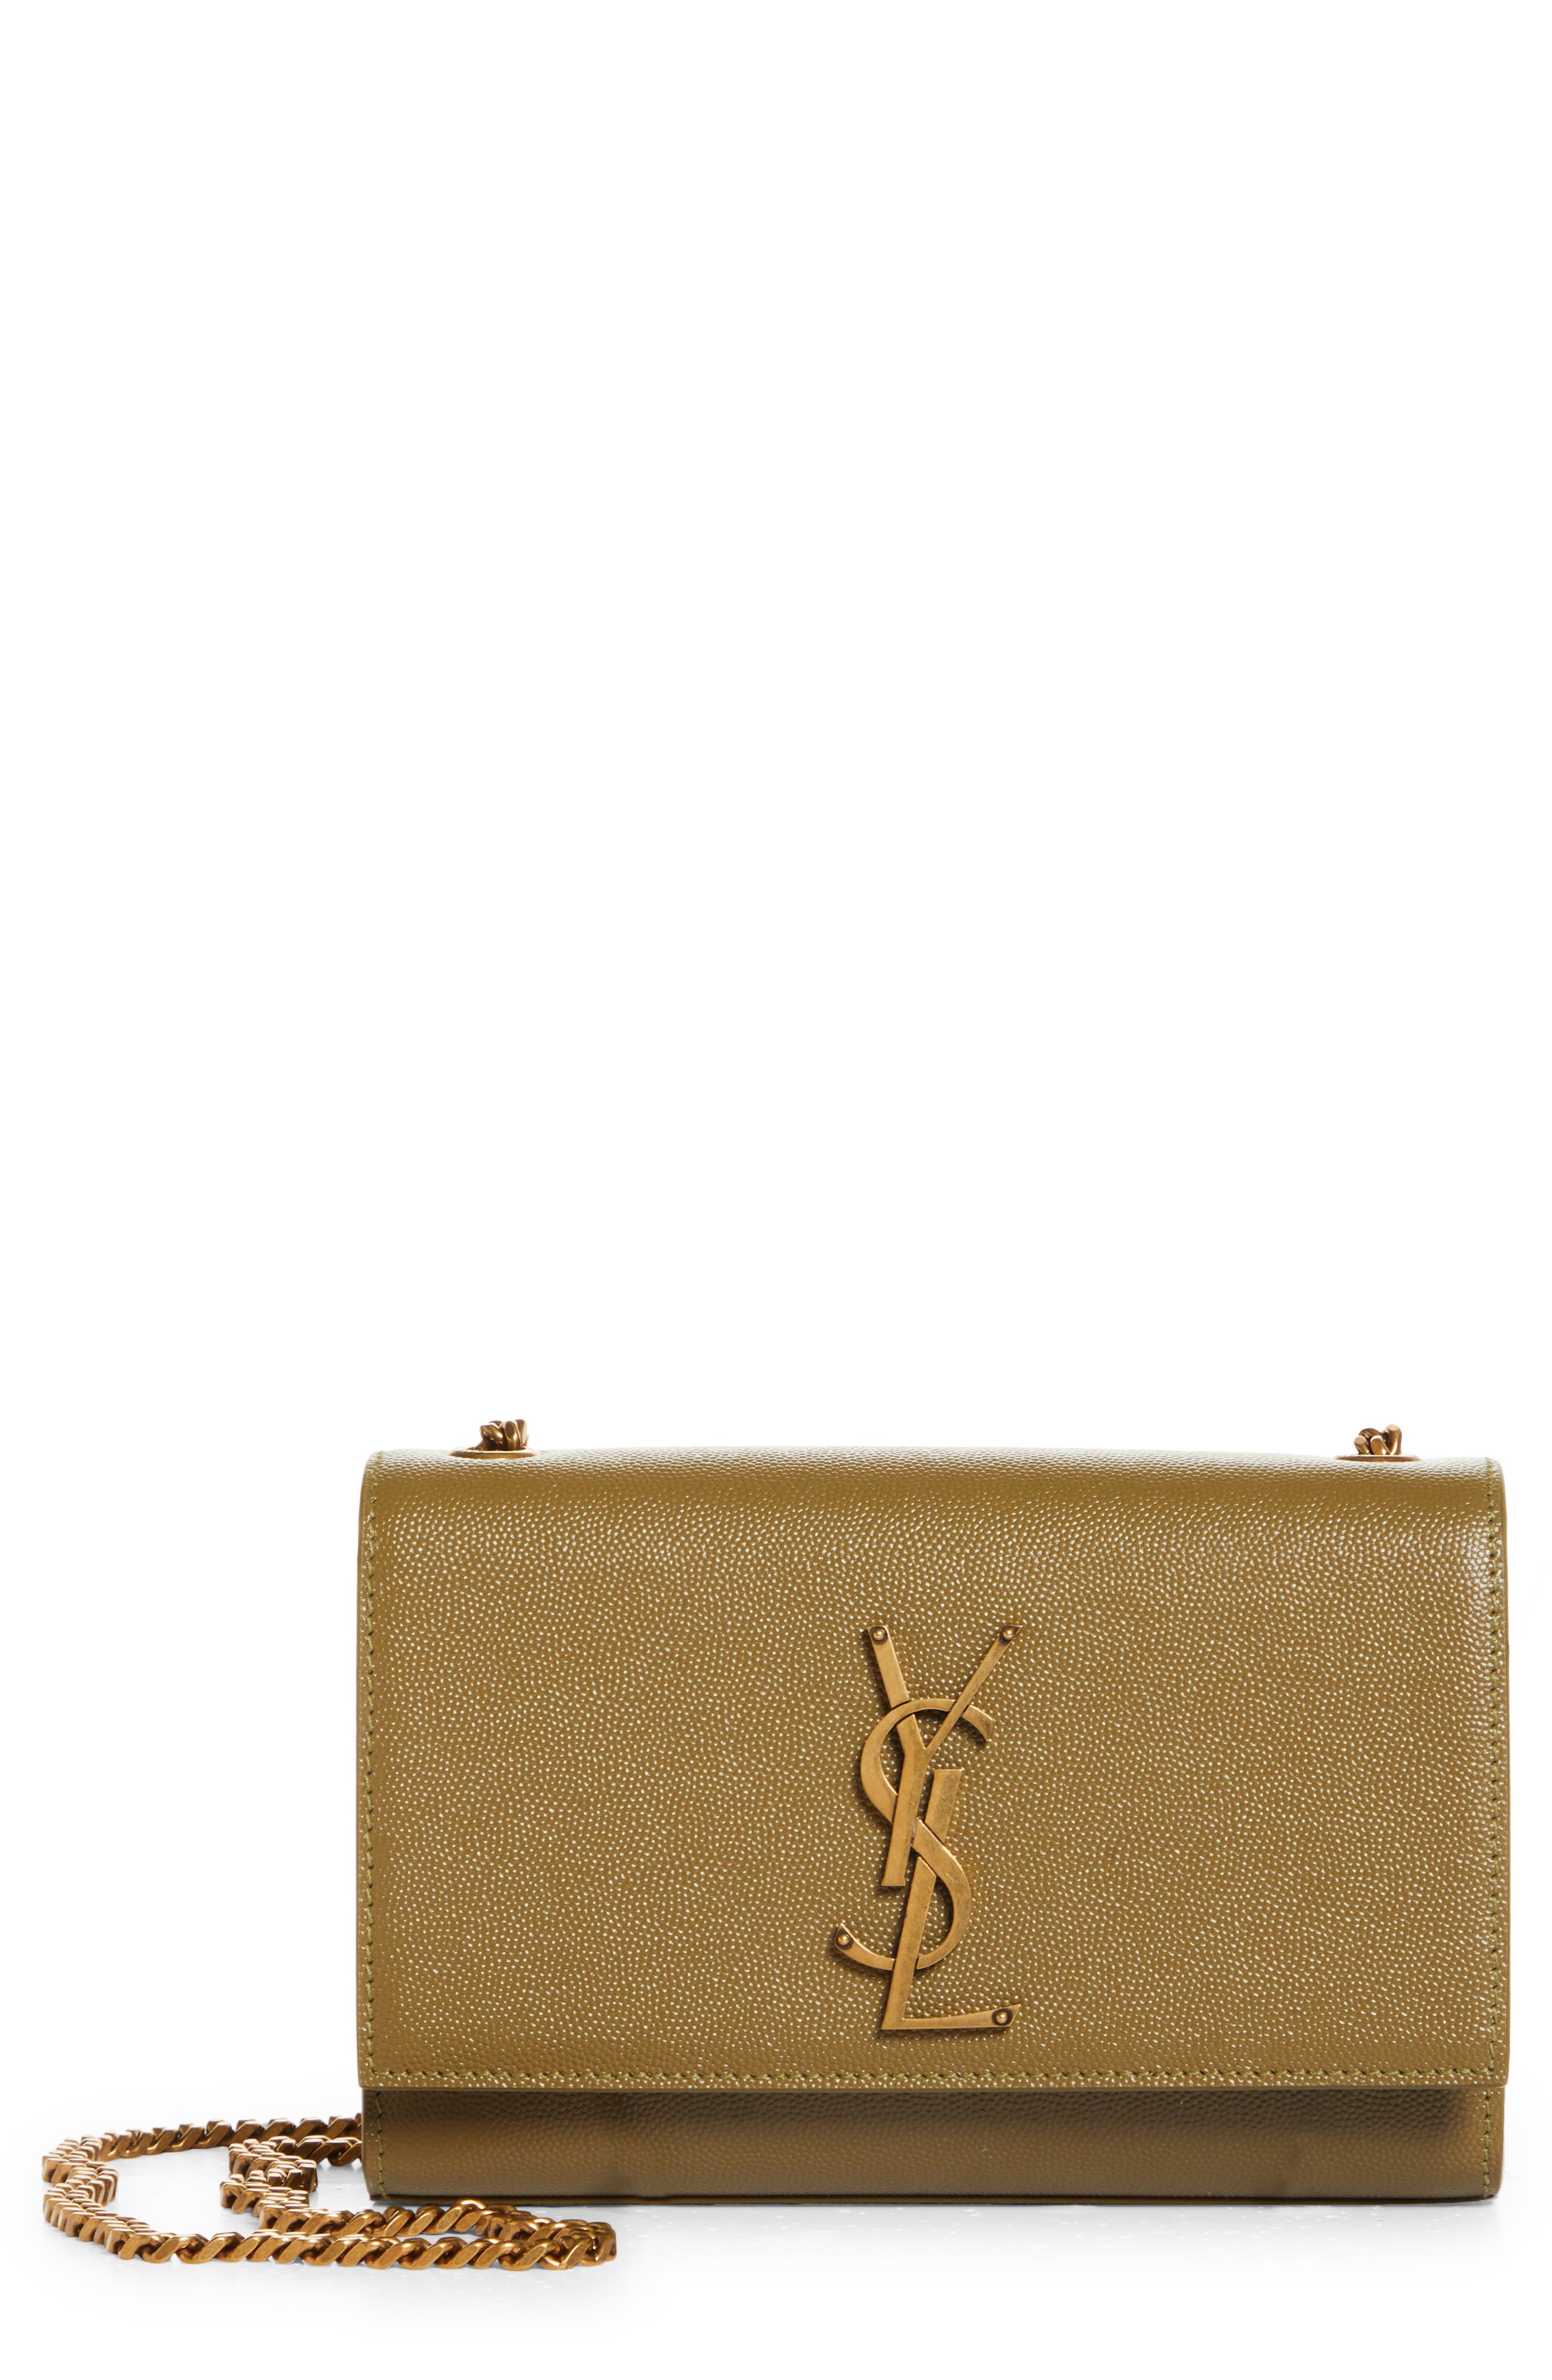 Small kate leather chain bag - Saint Laurent - Women